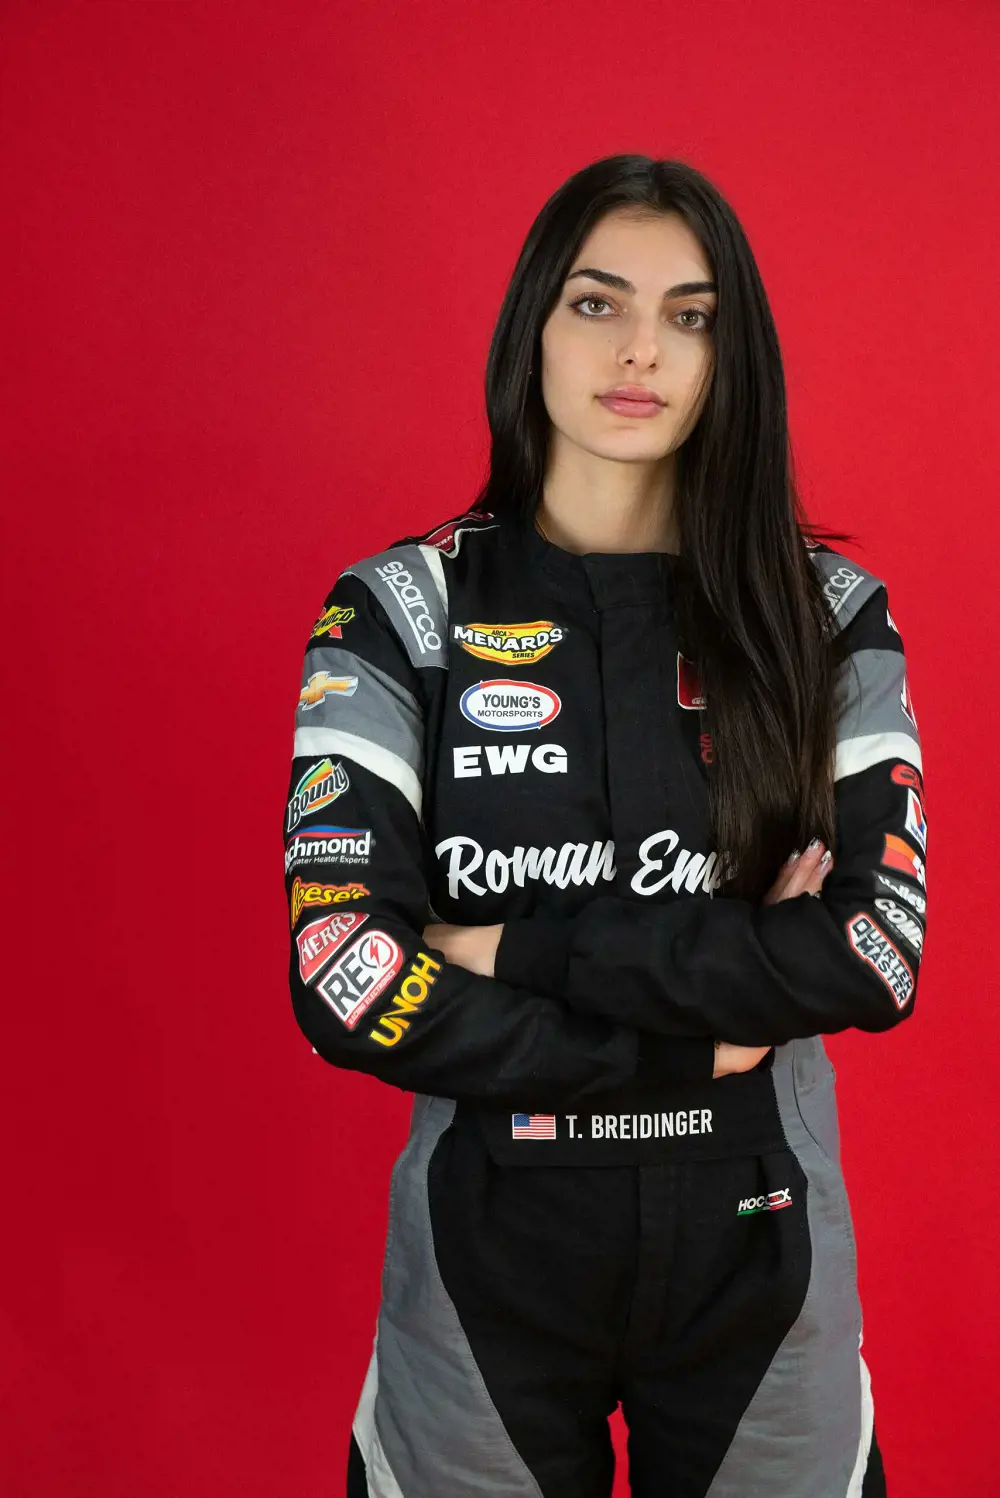 Toni Breidinger is the first Arab-American female driver in NASCAR